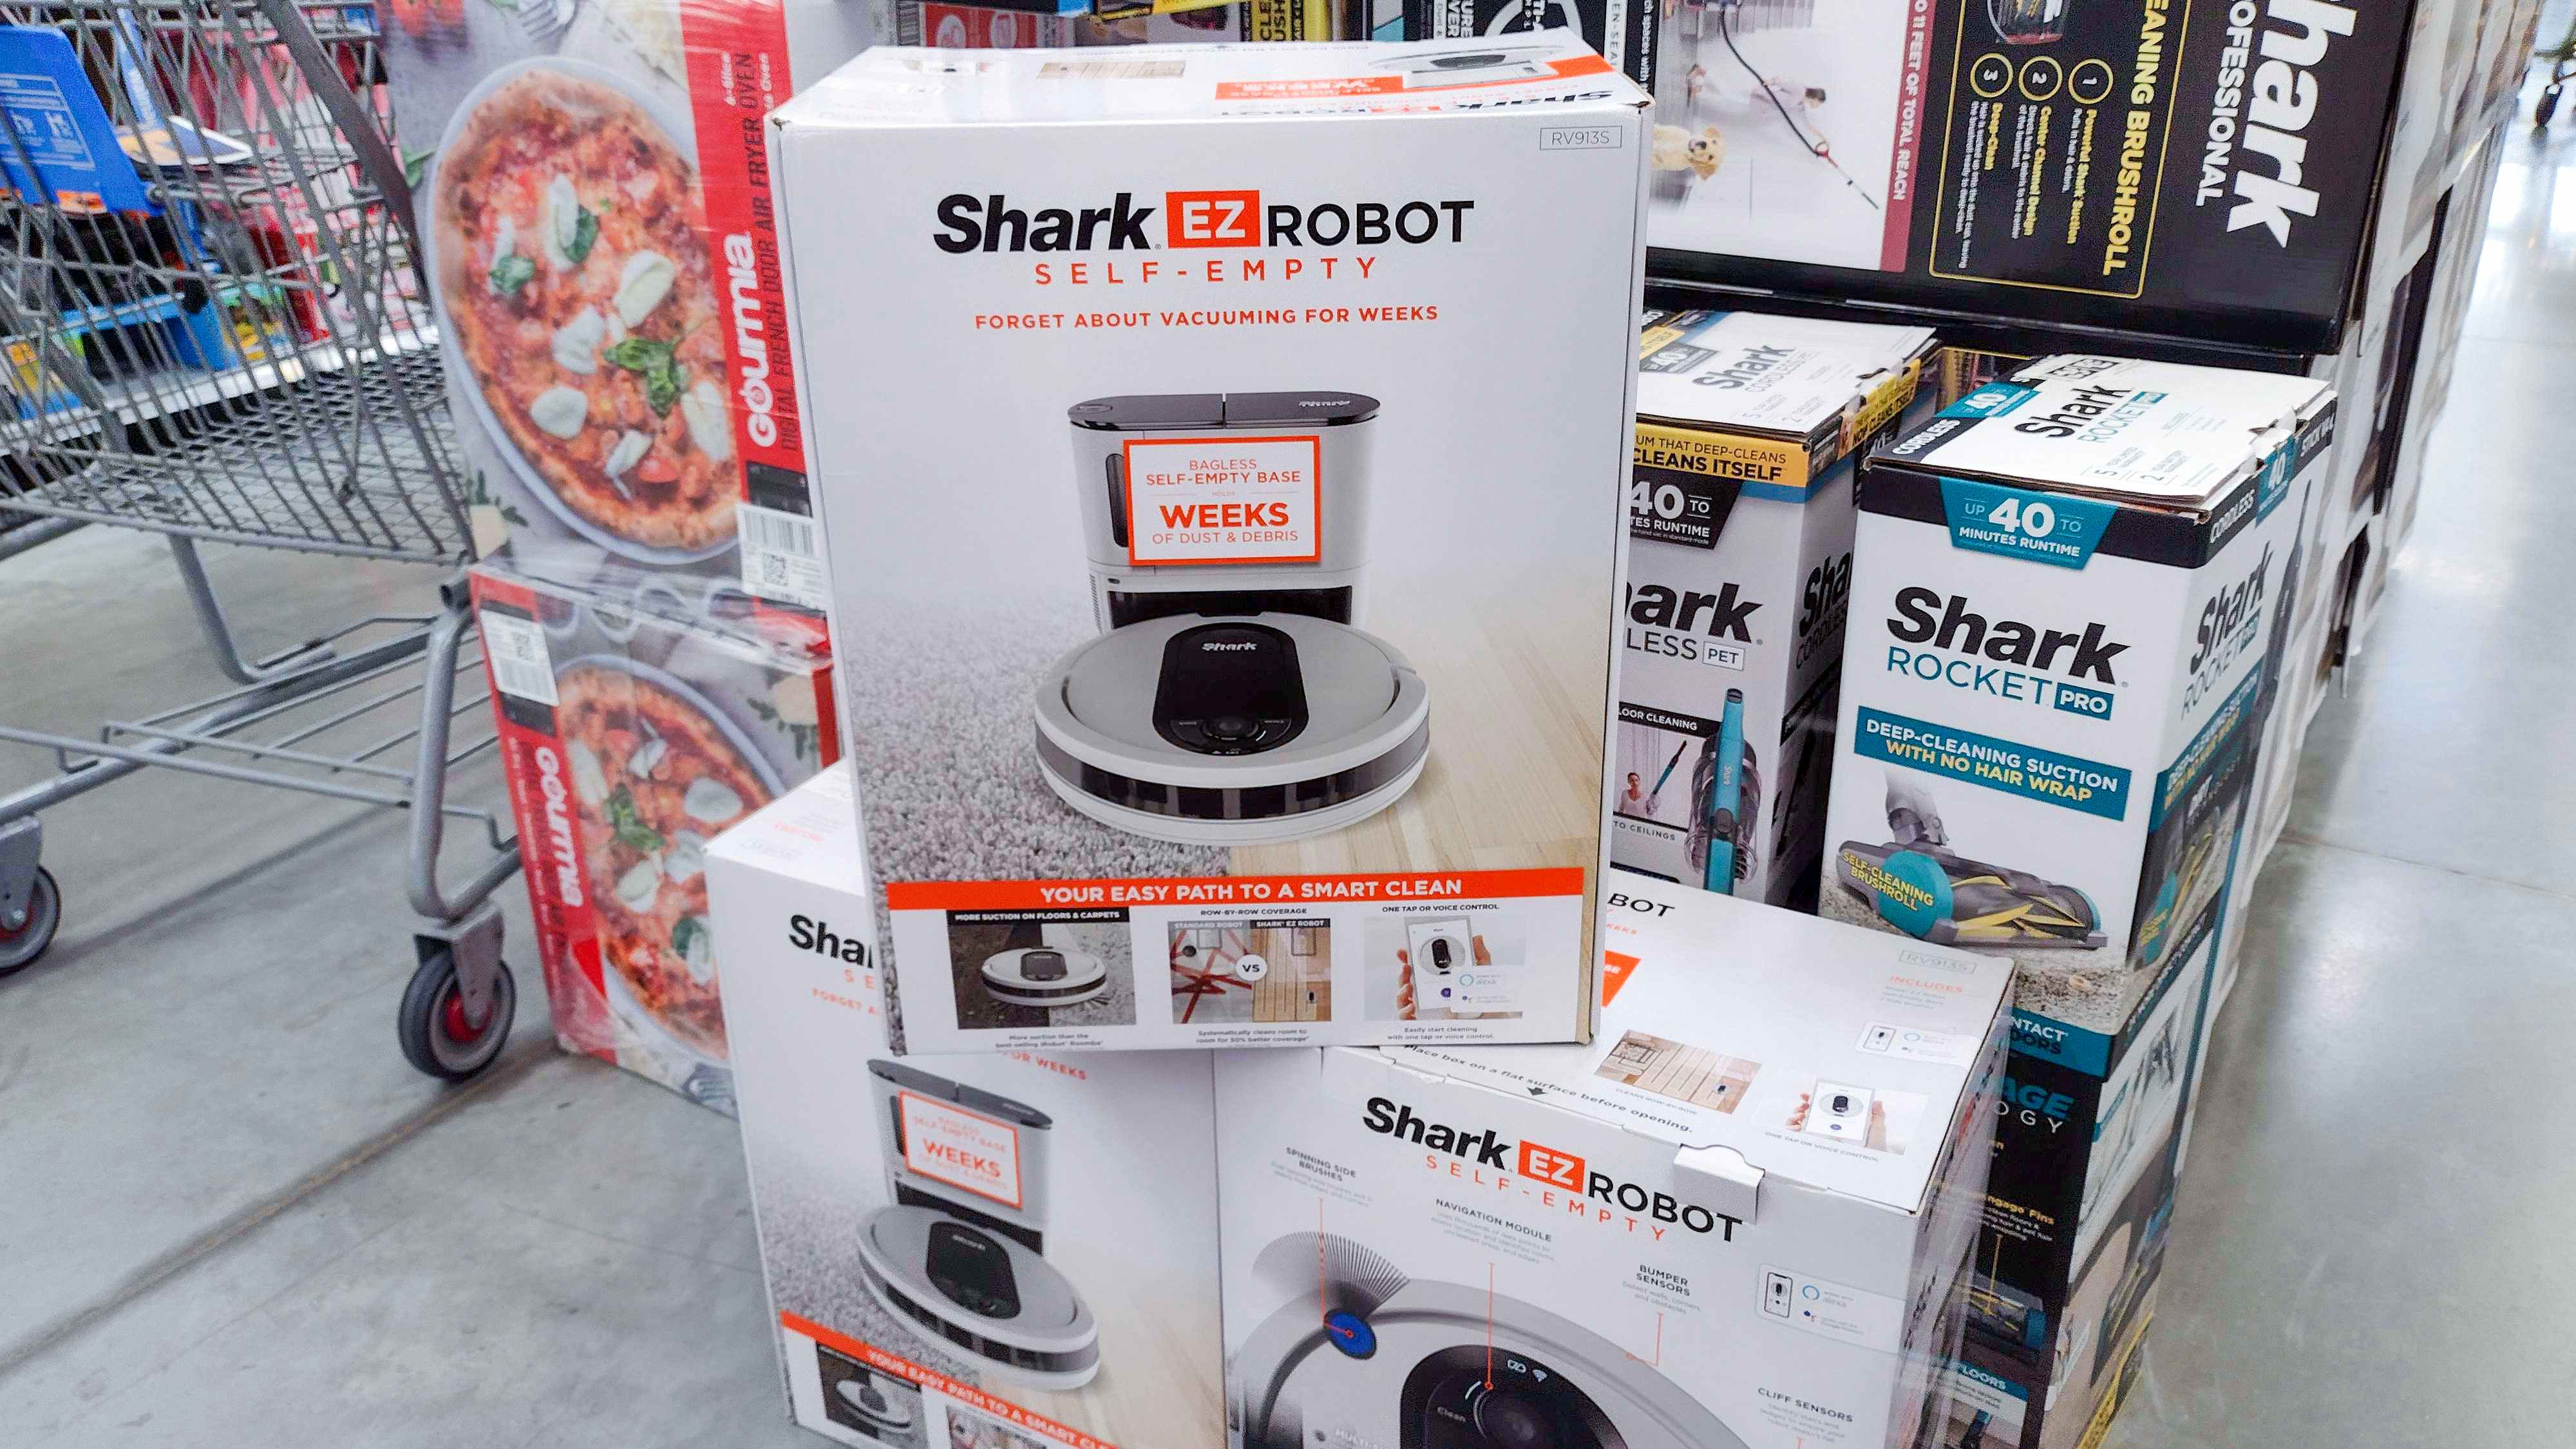 walmart shark ez robot vacuum on display